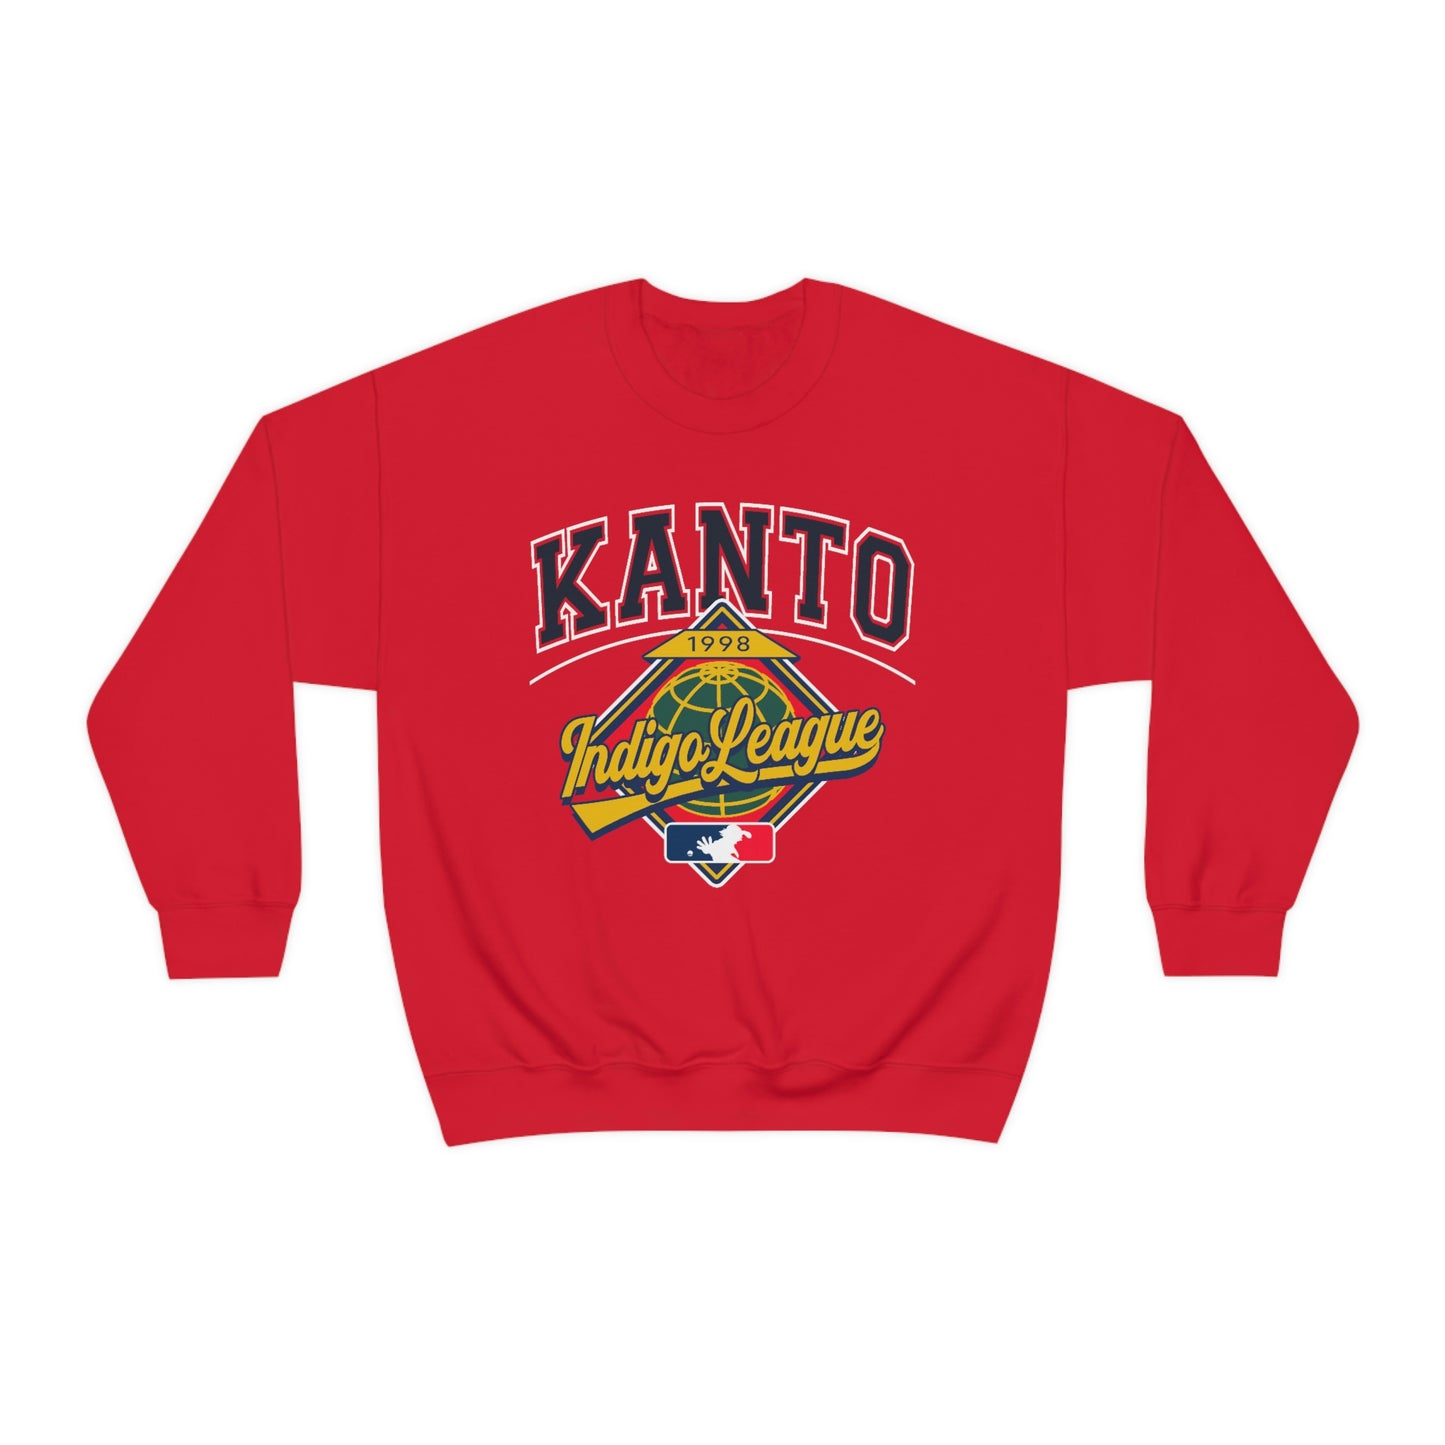 Kanto Champs University sweatshirt College shirt Crewneck Regions Baseball world series inspired 90s